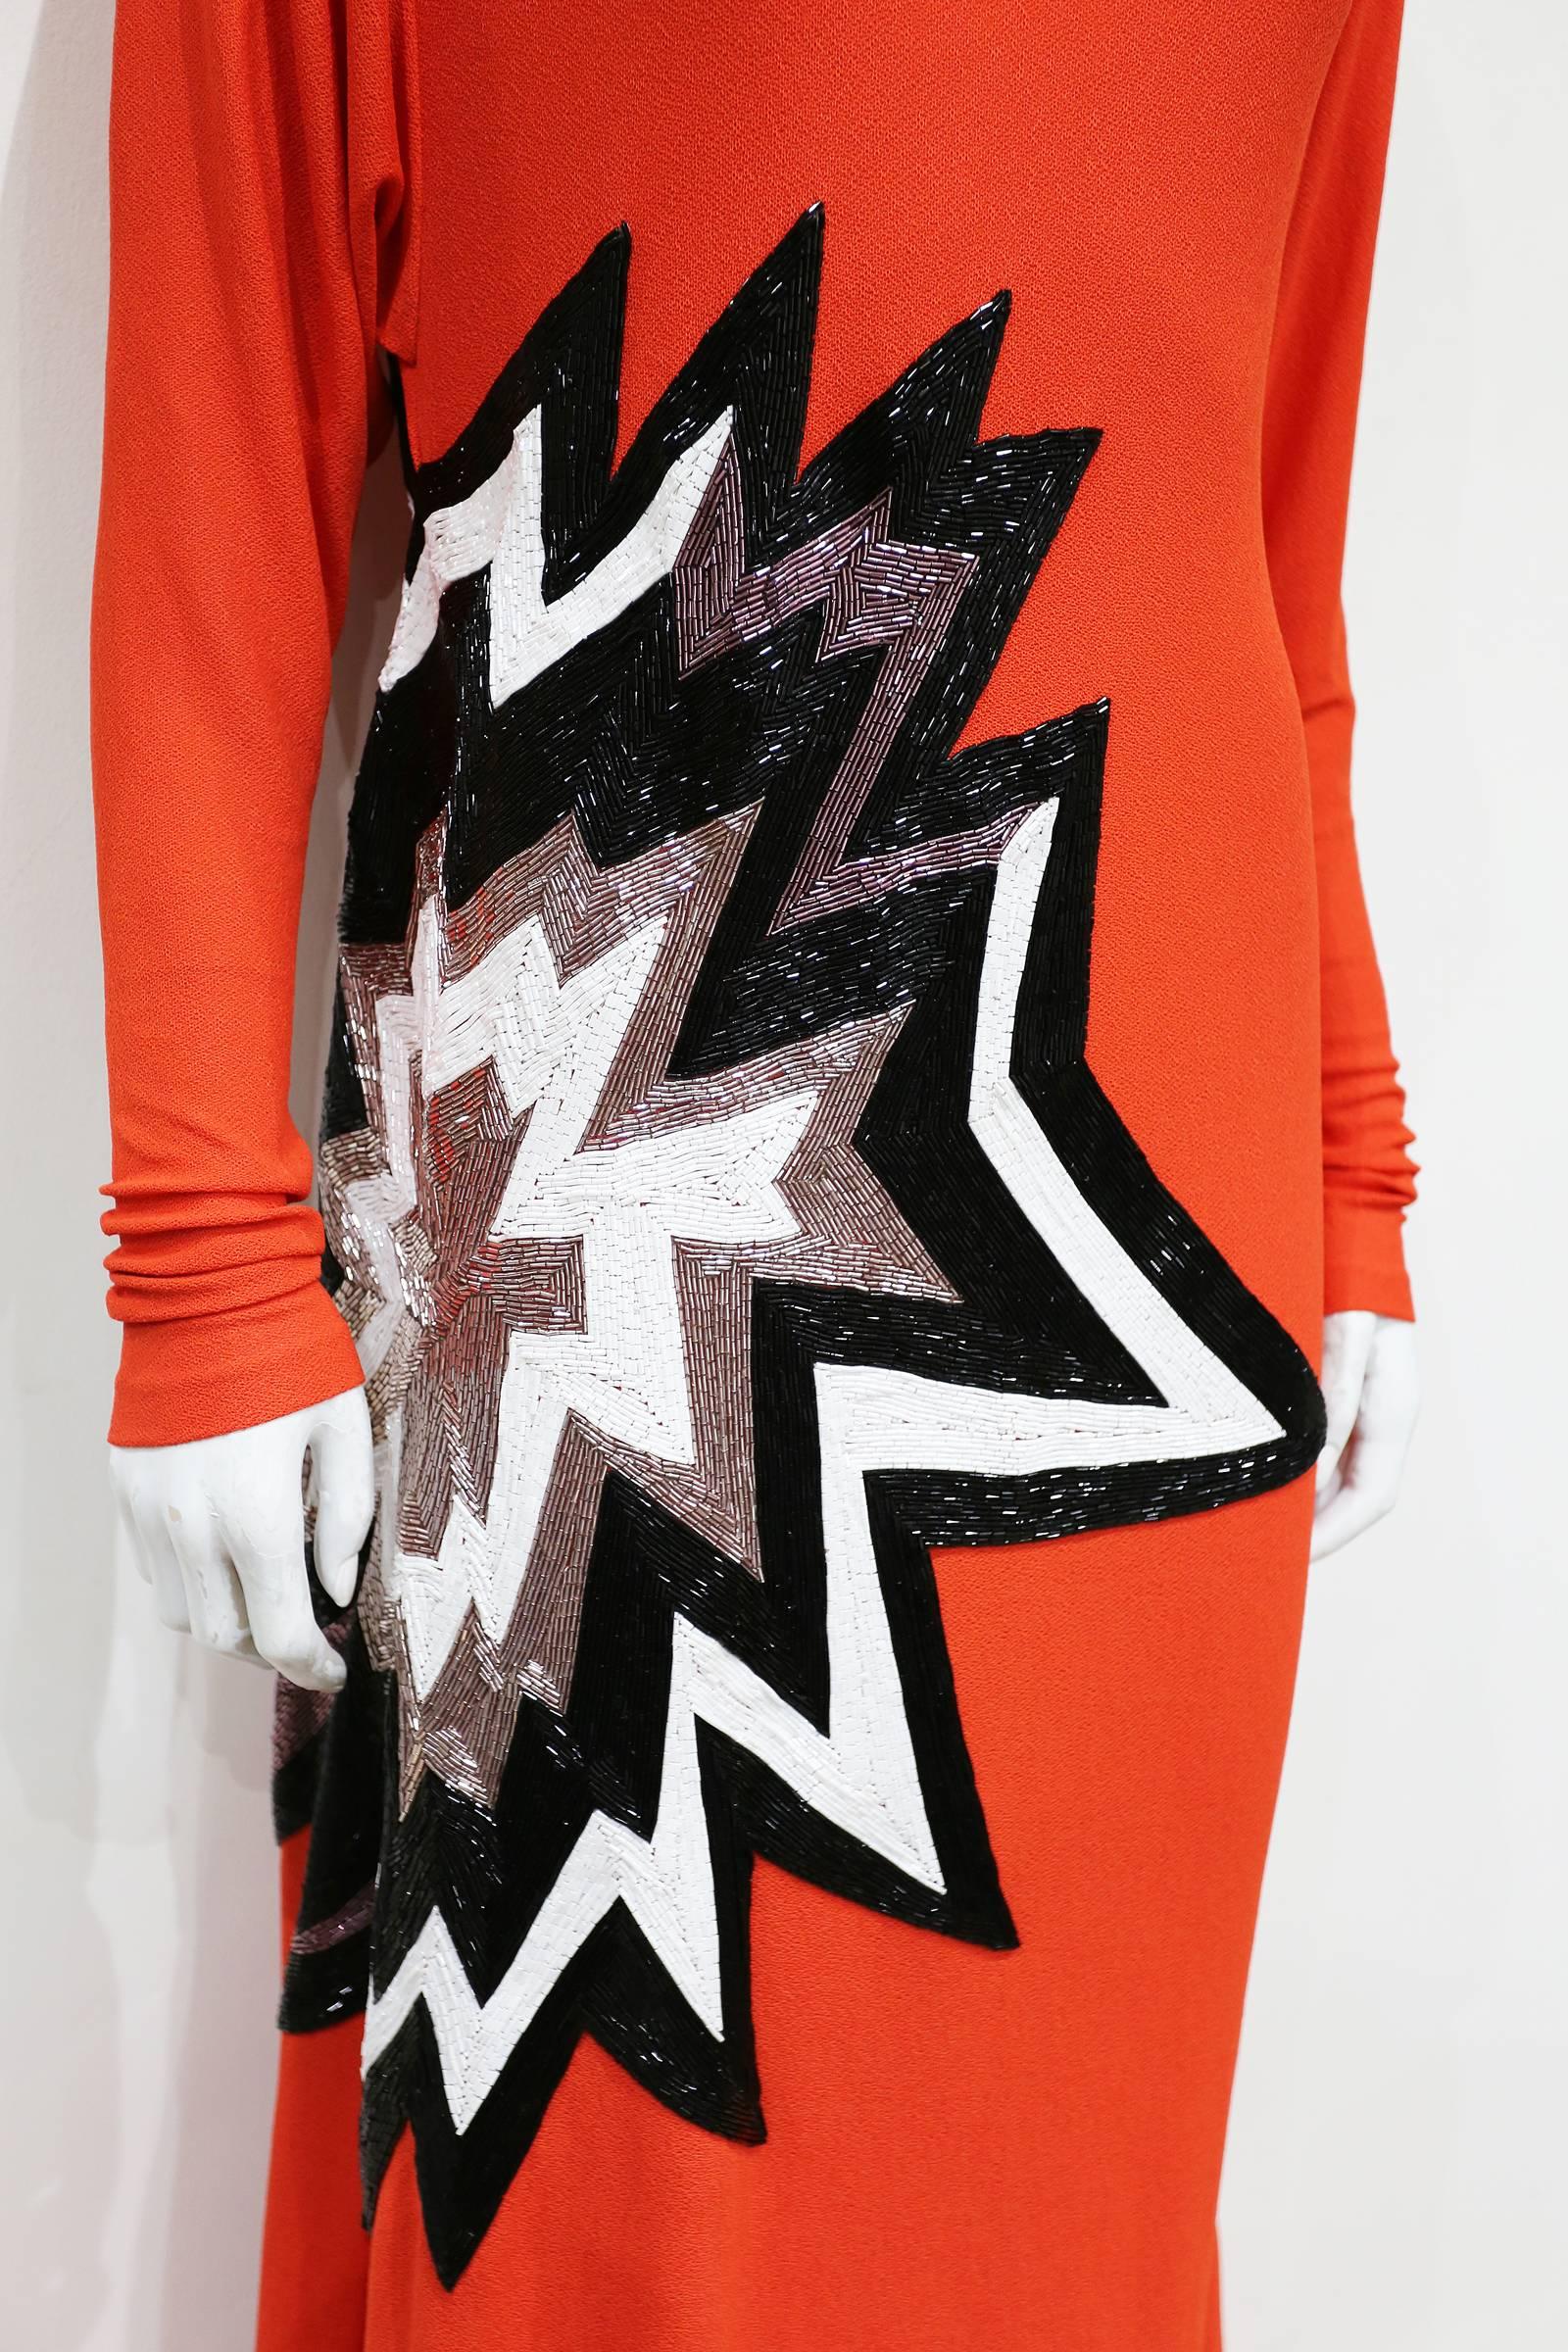 Women's Tom Ford embellished pop art inspired coral evening dress, c. 2013